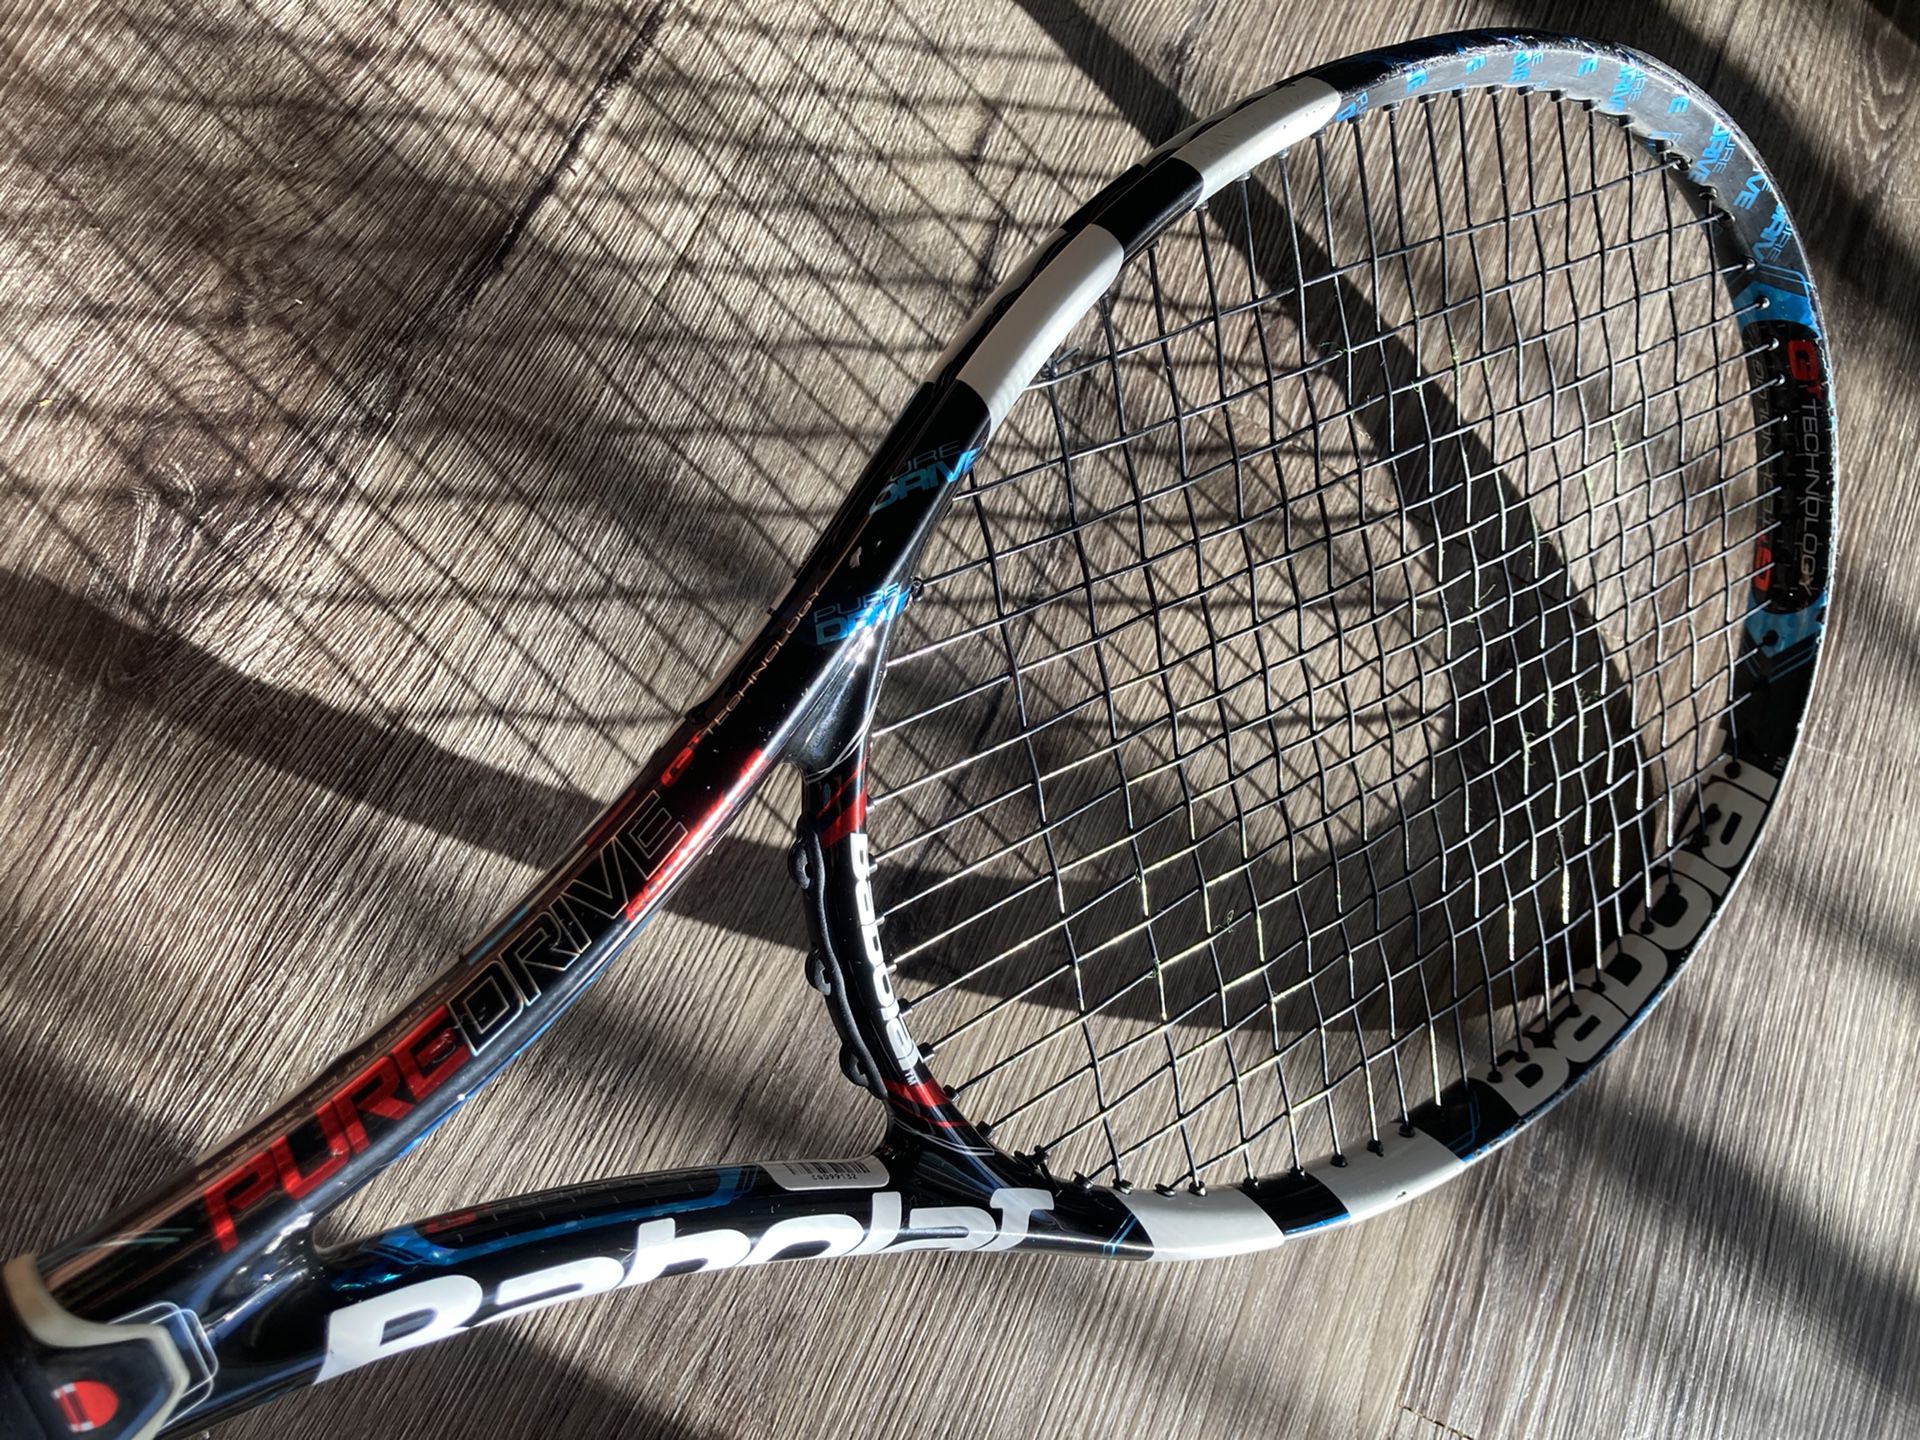 Babalot pure drive roddick jr tennis racket, grip 41/4 ,very good condition